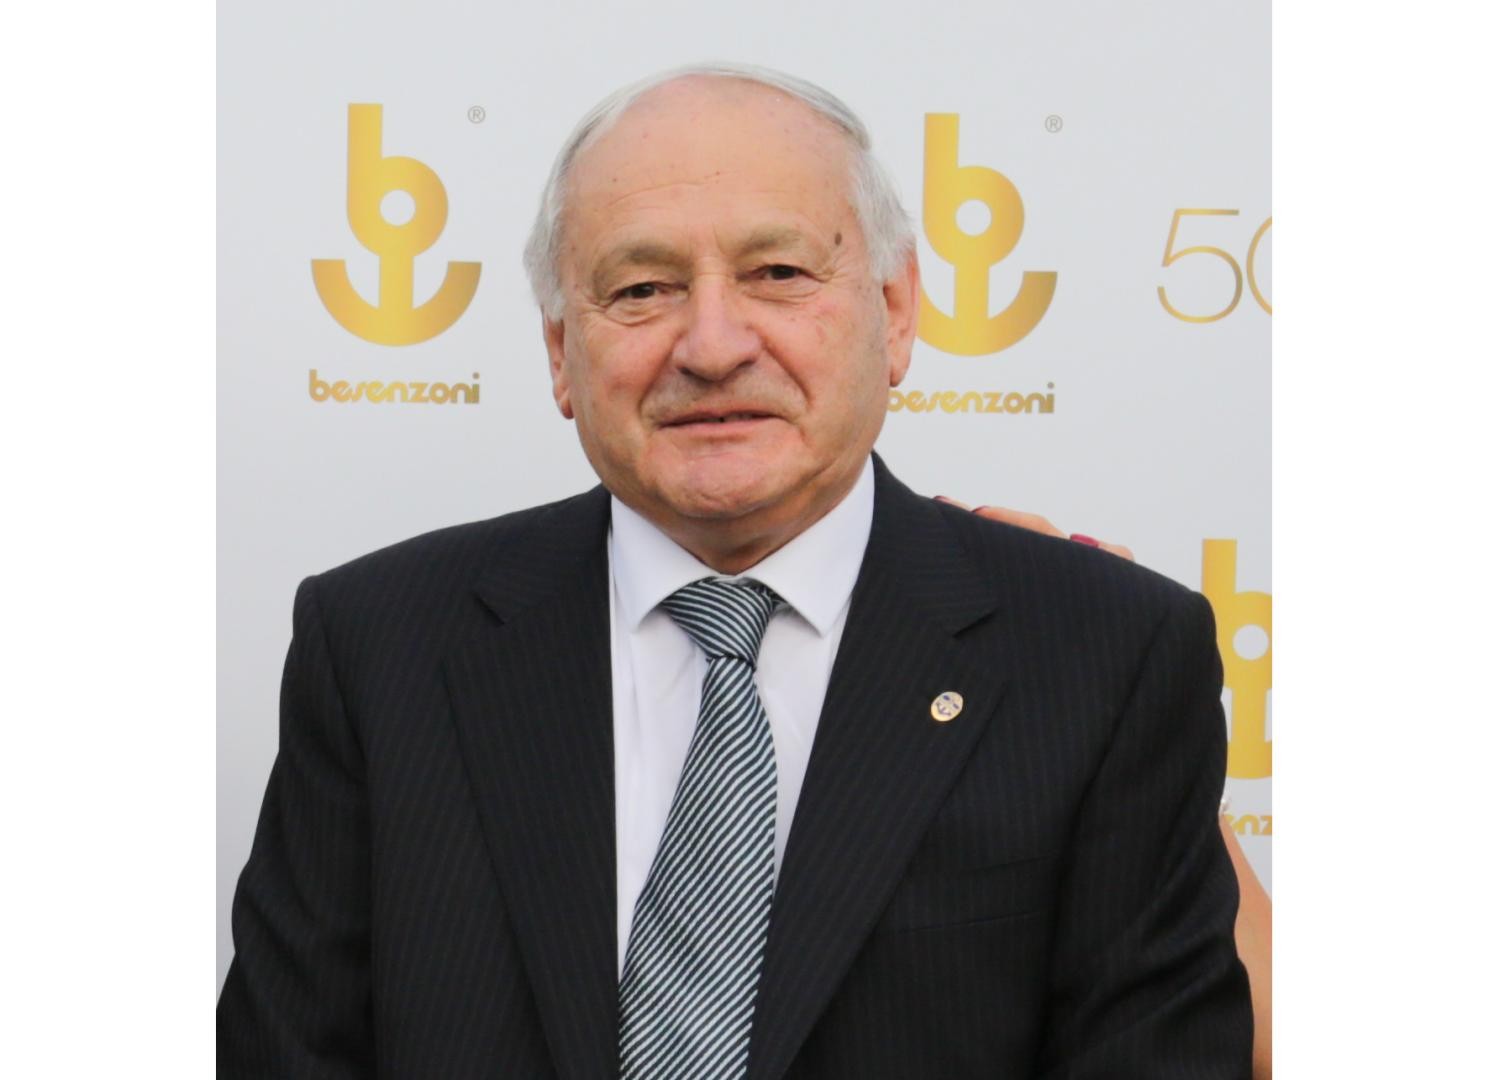 Giovanni Besenzoni, founder and president of Besenzoni SpA